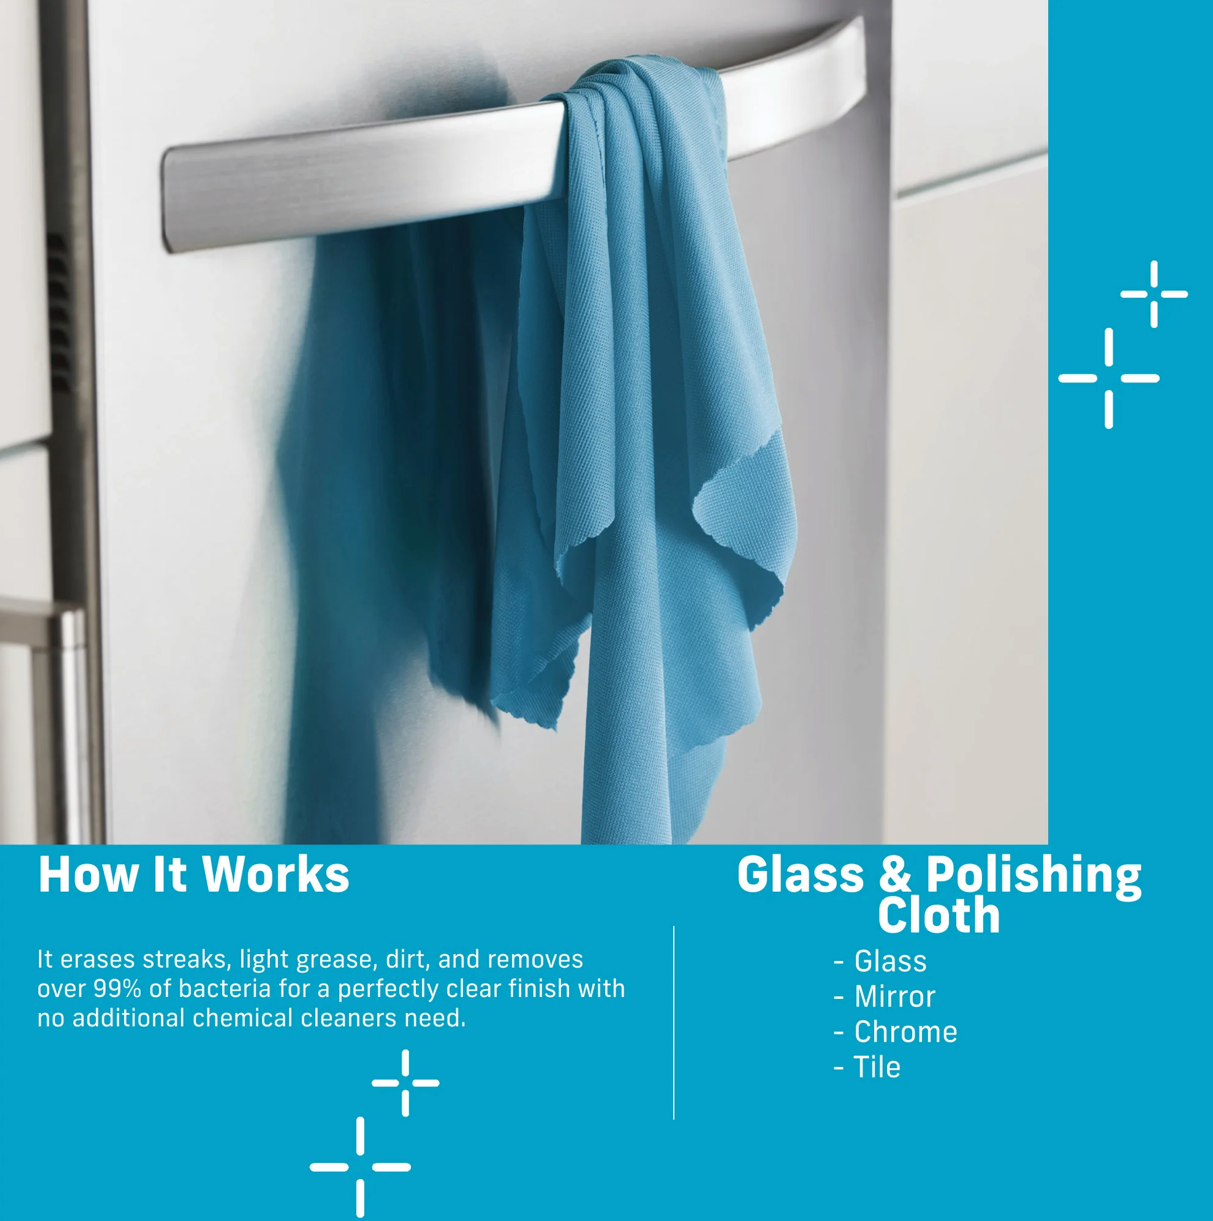 *E-Cloth Glass + Polishing Cloth